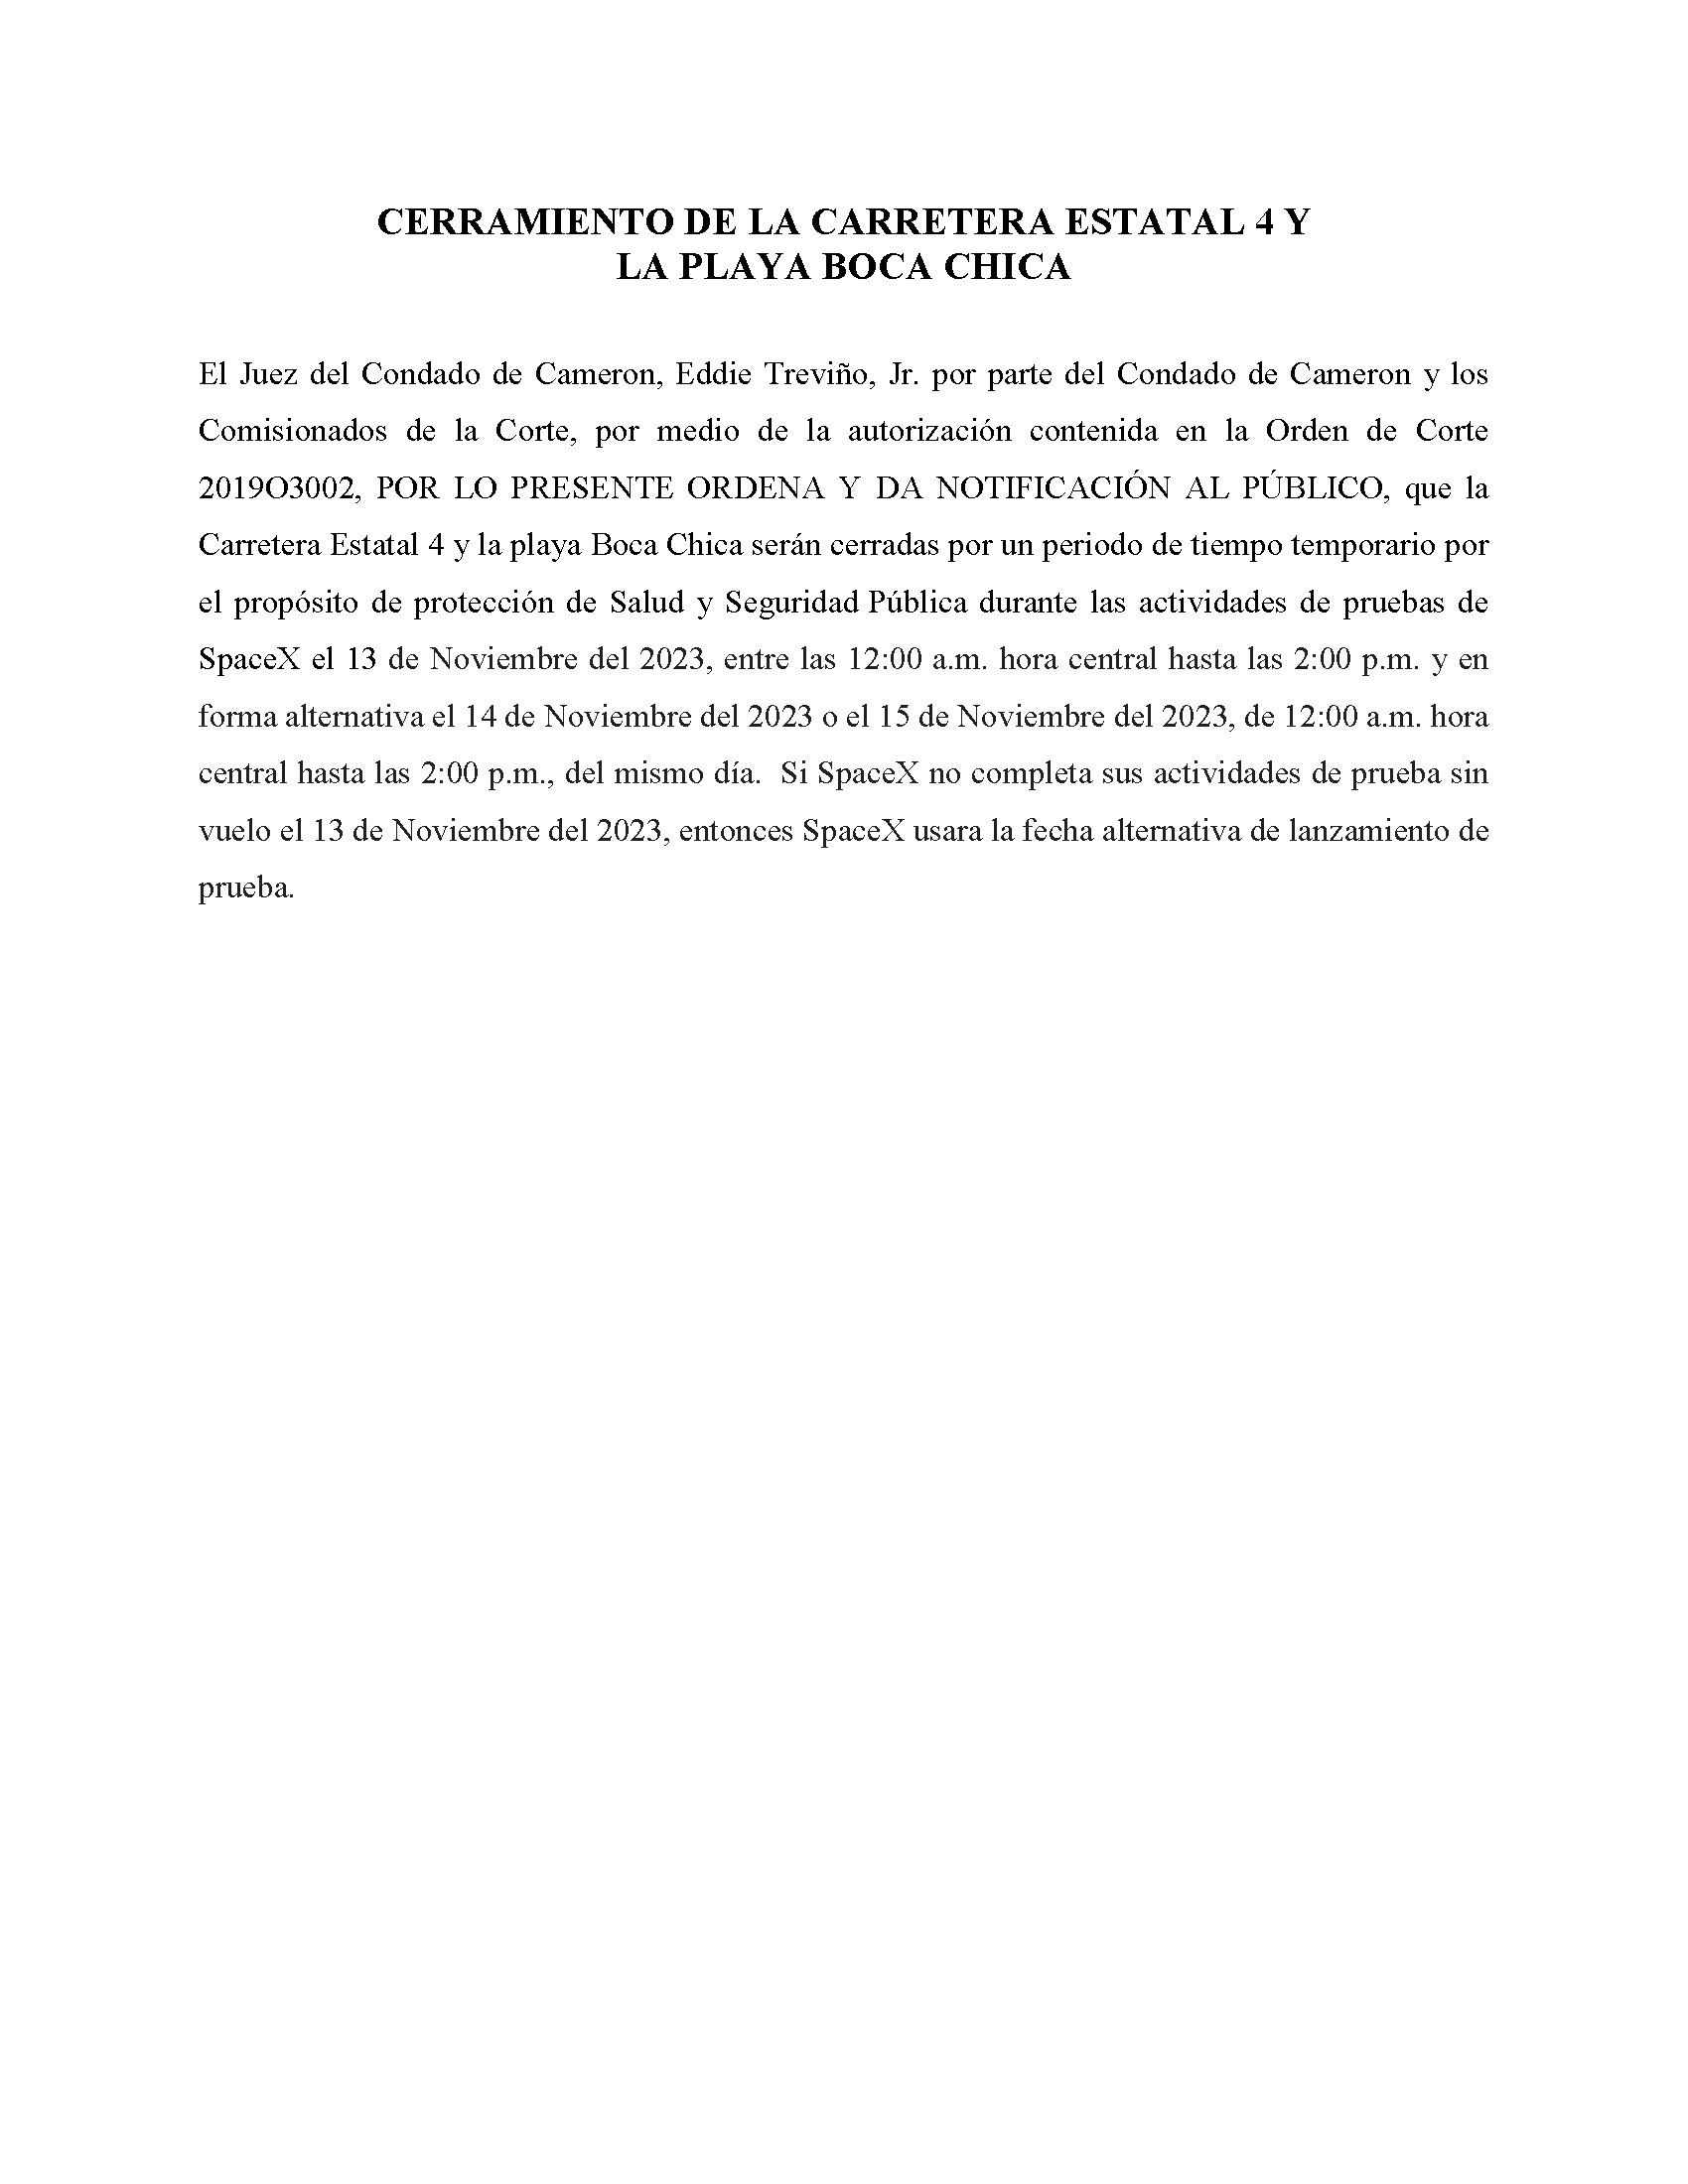 ORDER.CLOSURE OF HIGHWAY 4 Y LA PLAYA BOCA CHICA.SPANISH.11.13.23